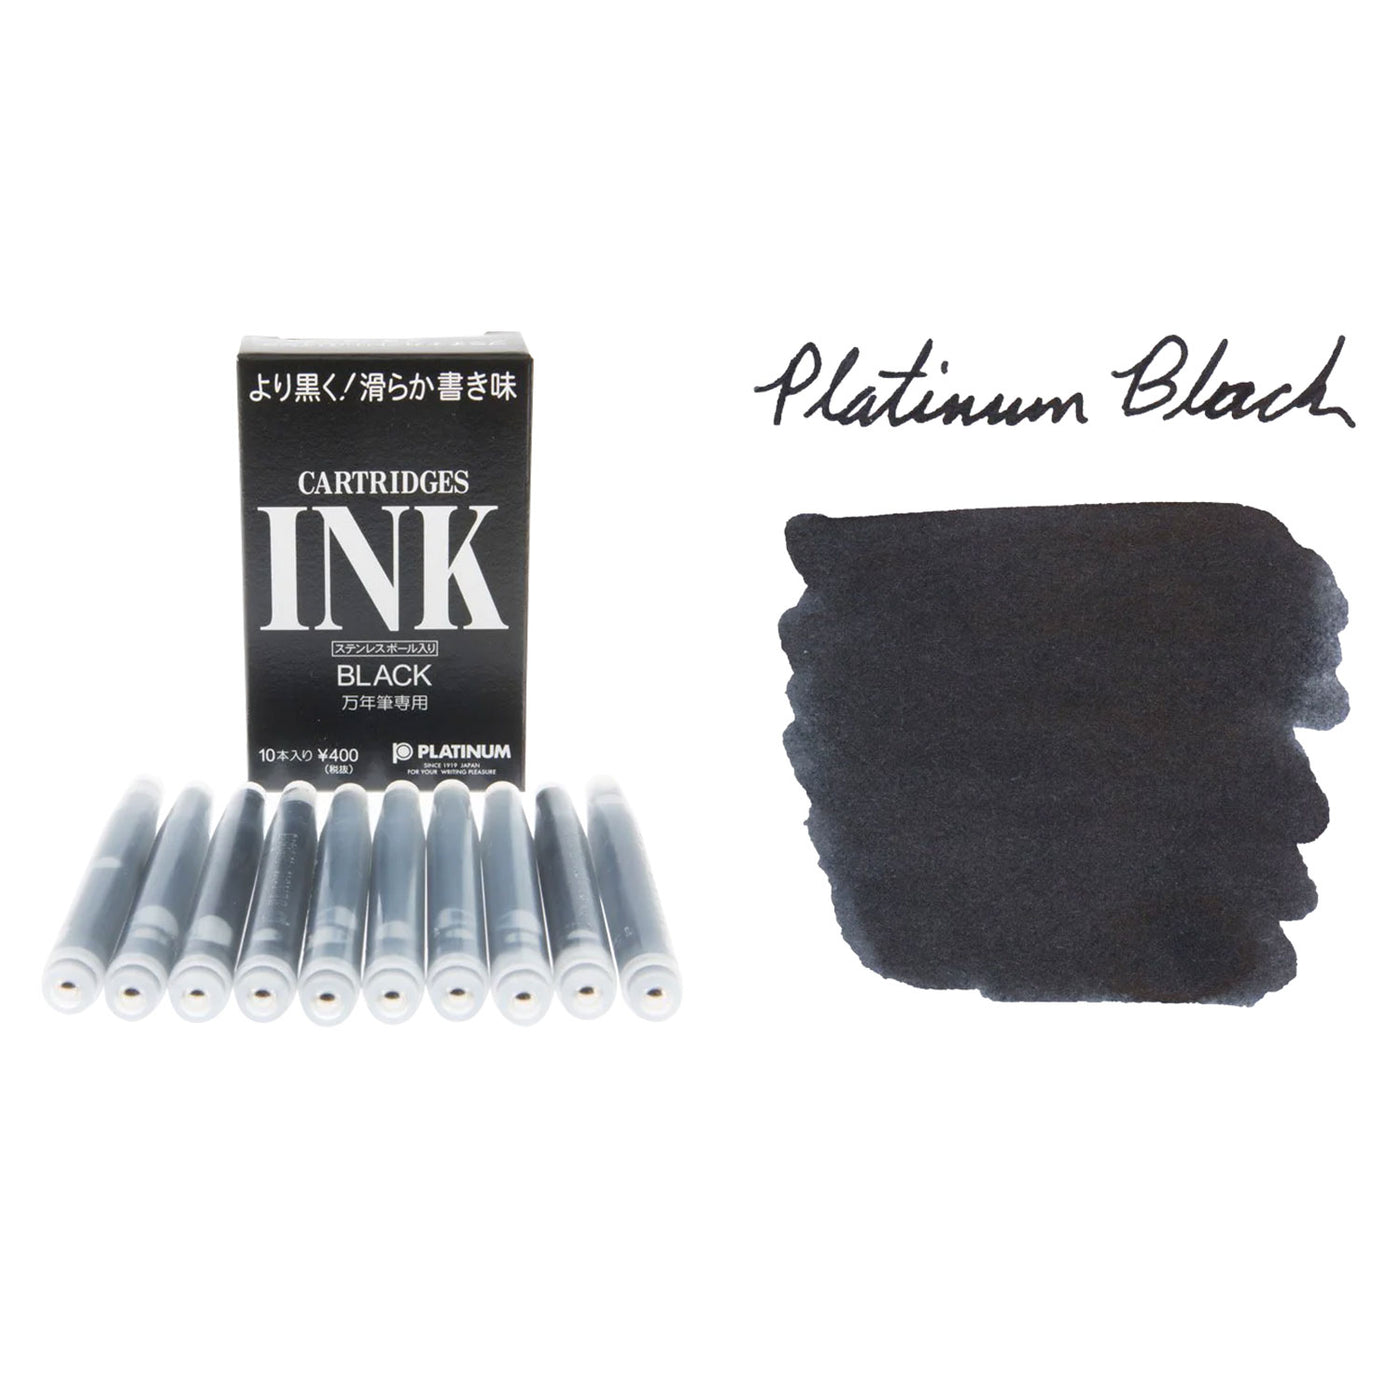 Platinum Dye Ink Cartridge  Pack of 10 - Black